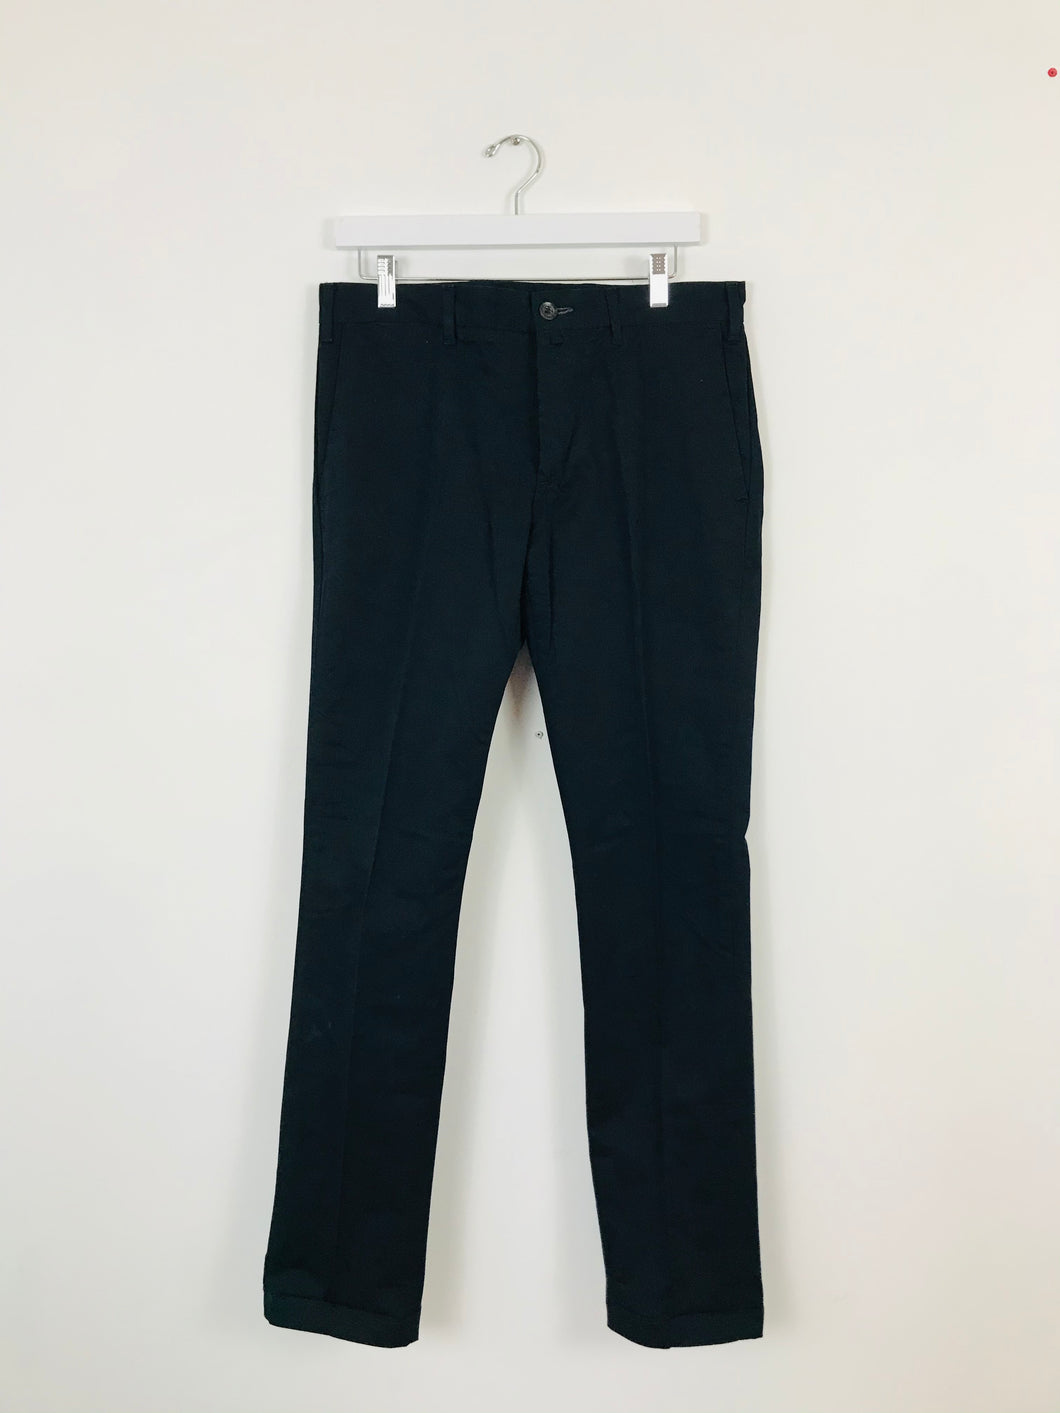 Zara Youth Men’s Slim Fit Chino Trousers | 40 UK31 | Blue